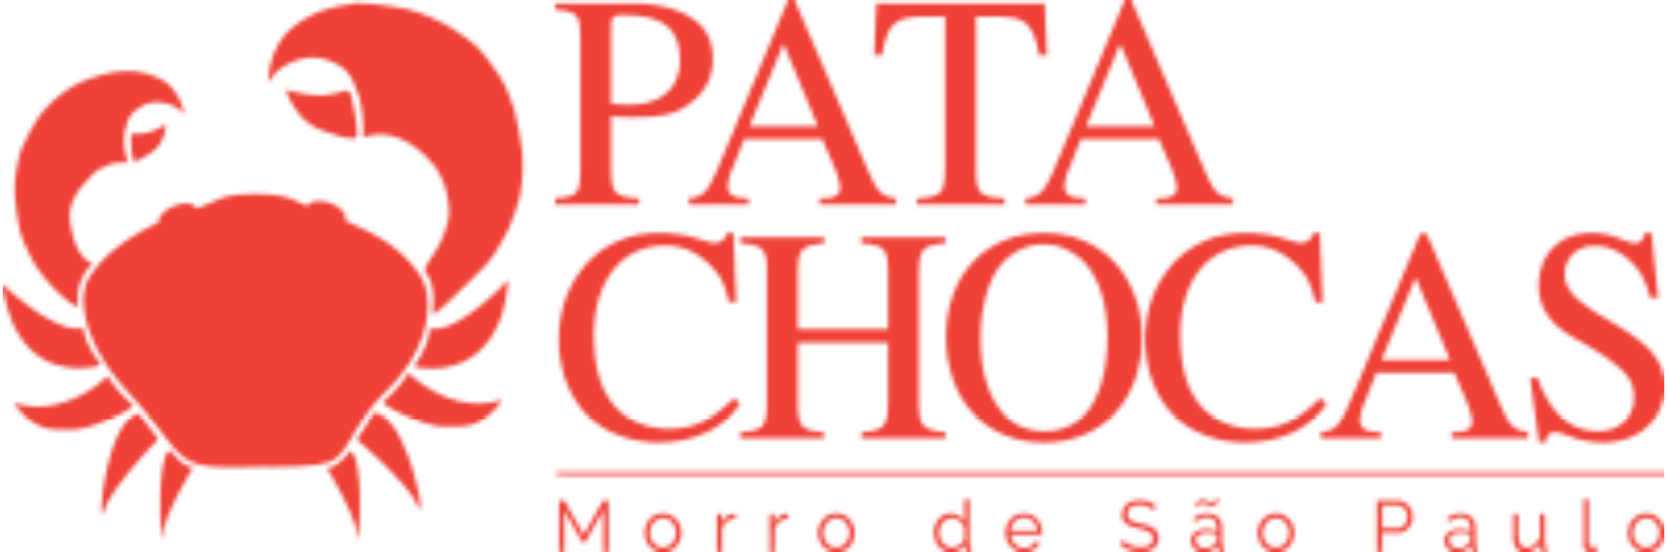 Patachocas